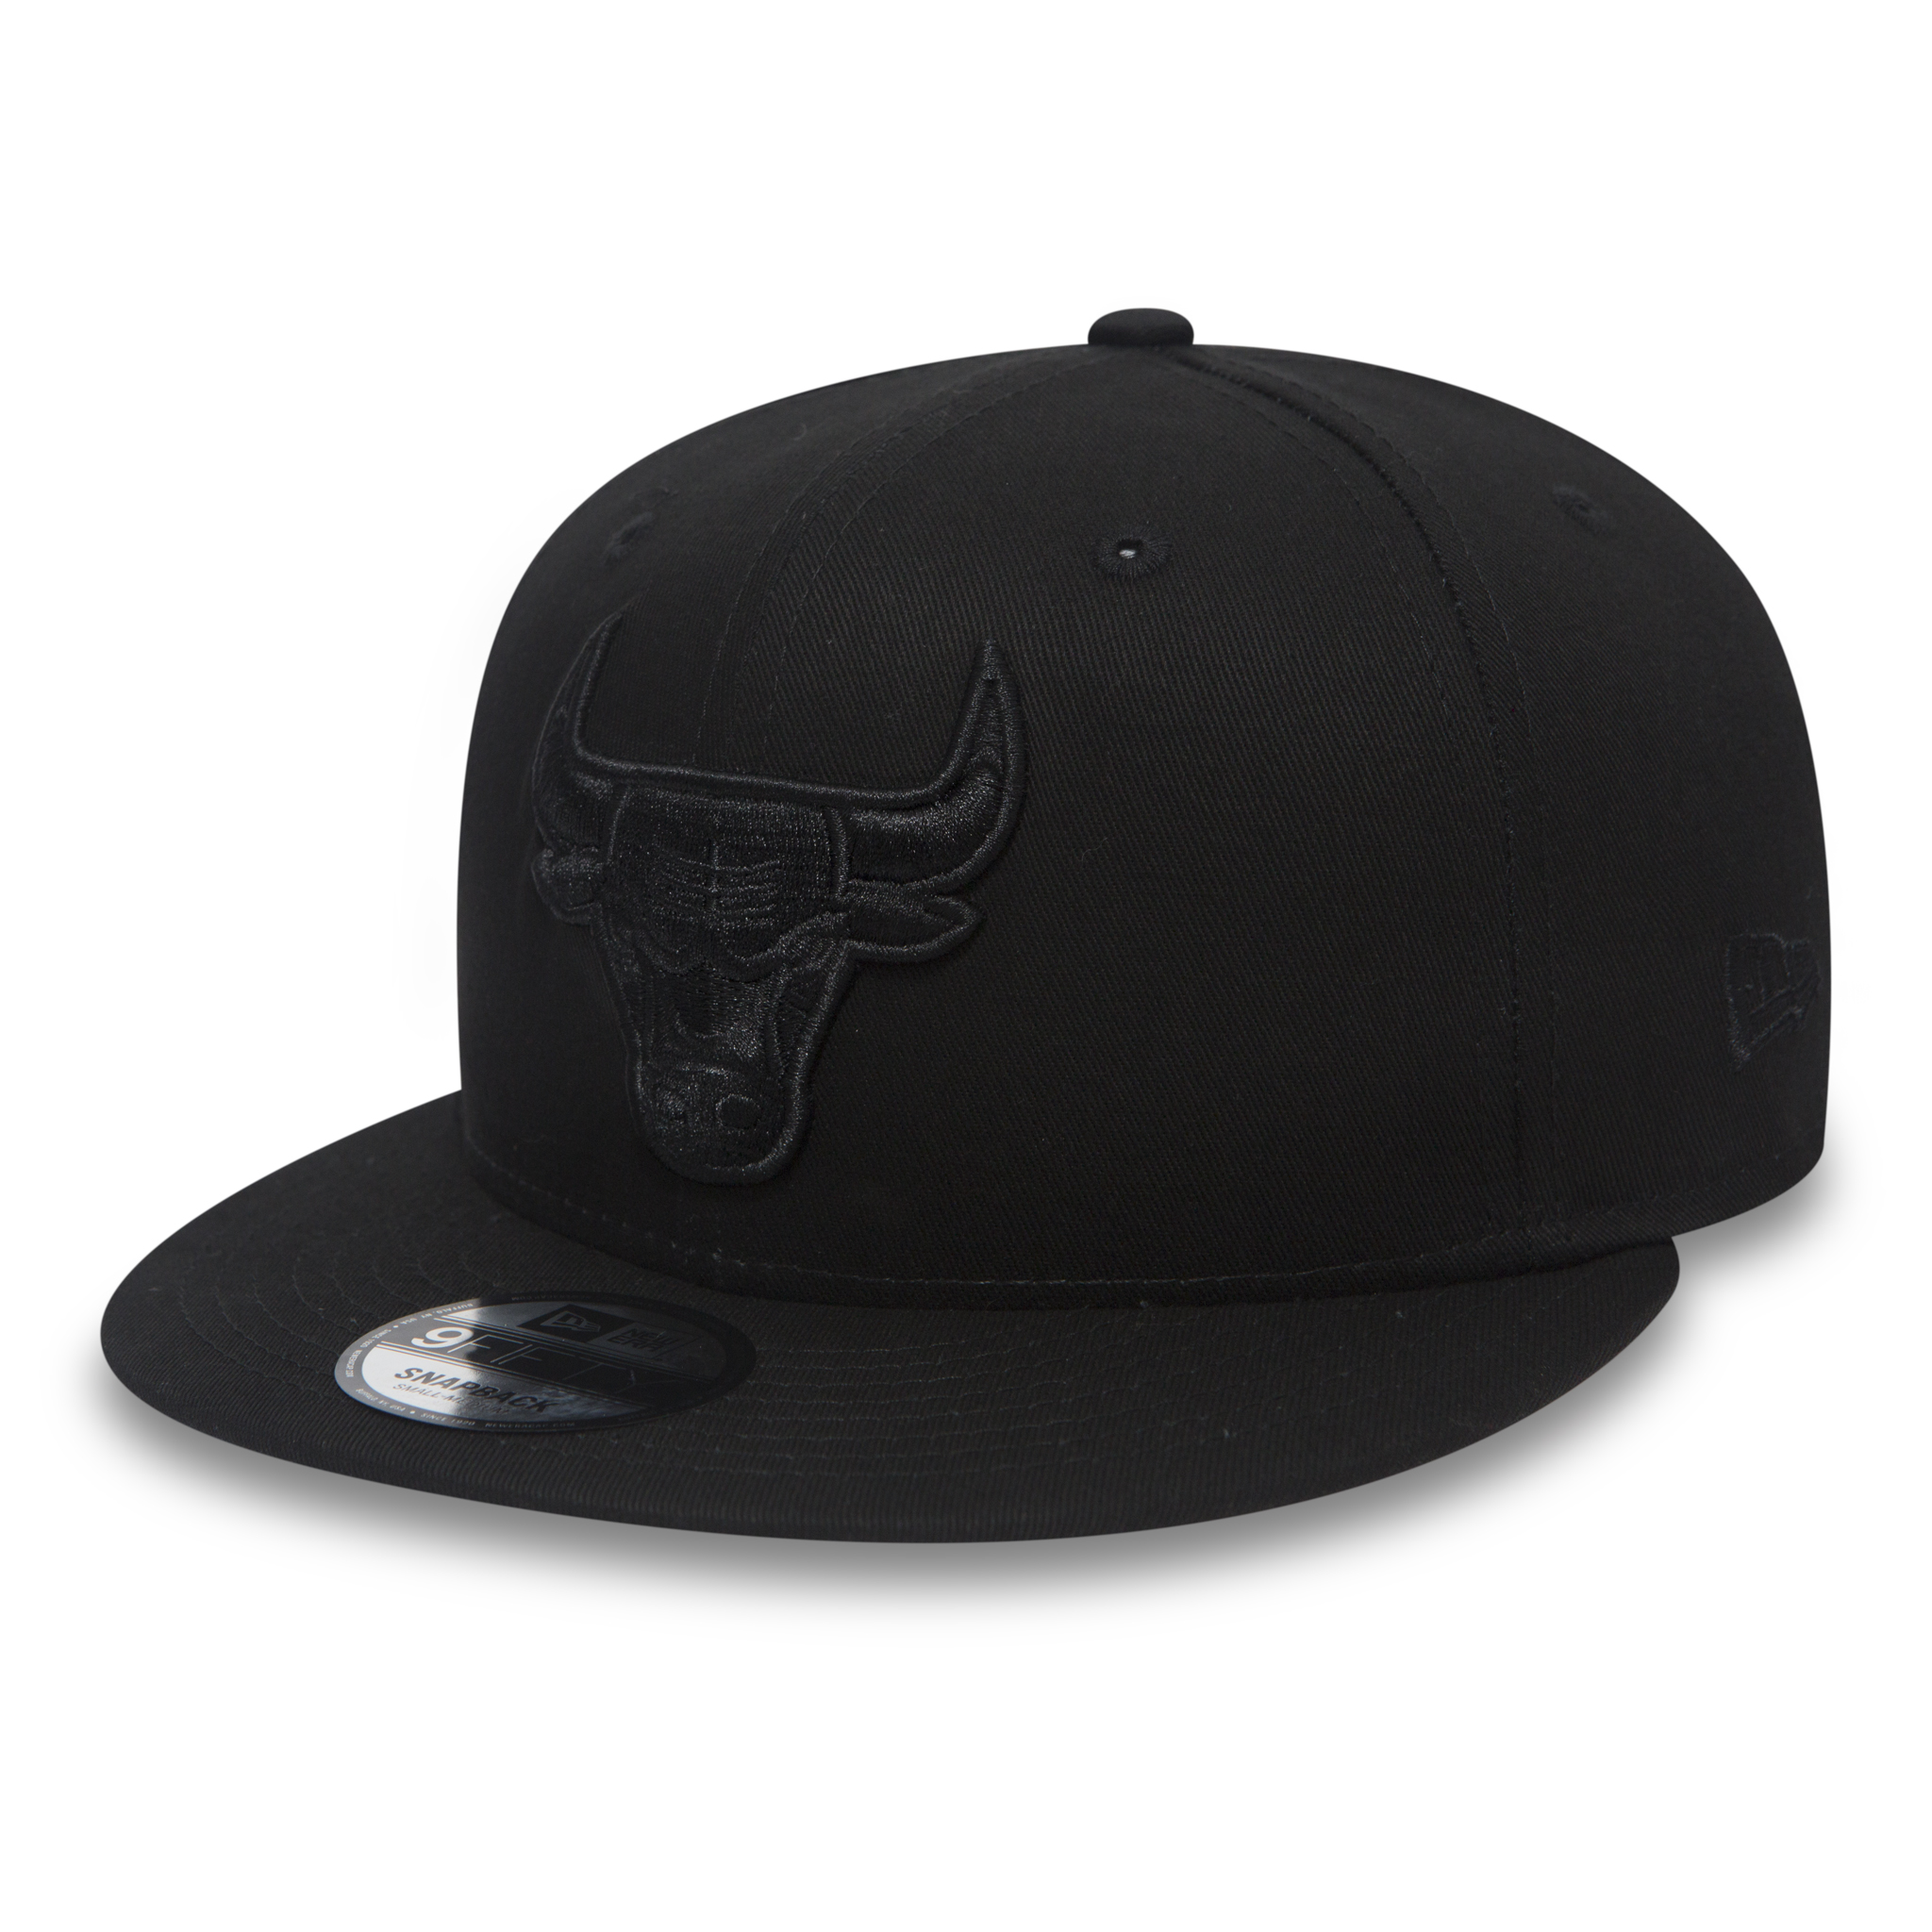 Chicago Bulls Black on Black 9FIFTY Snapback Cap